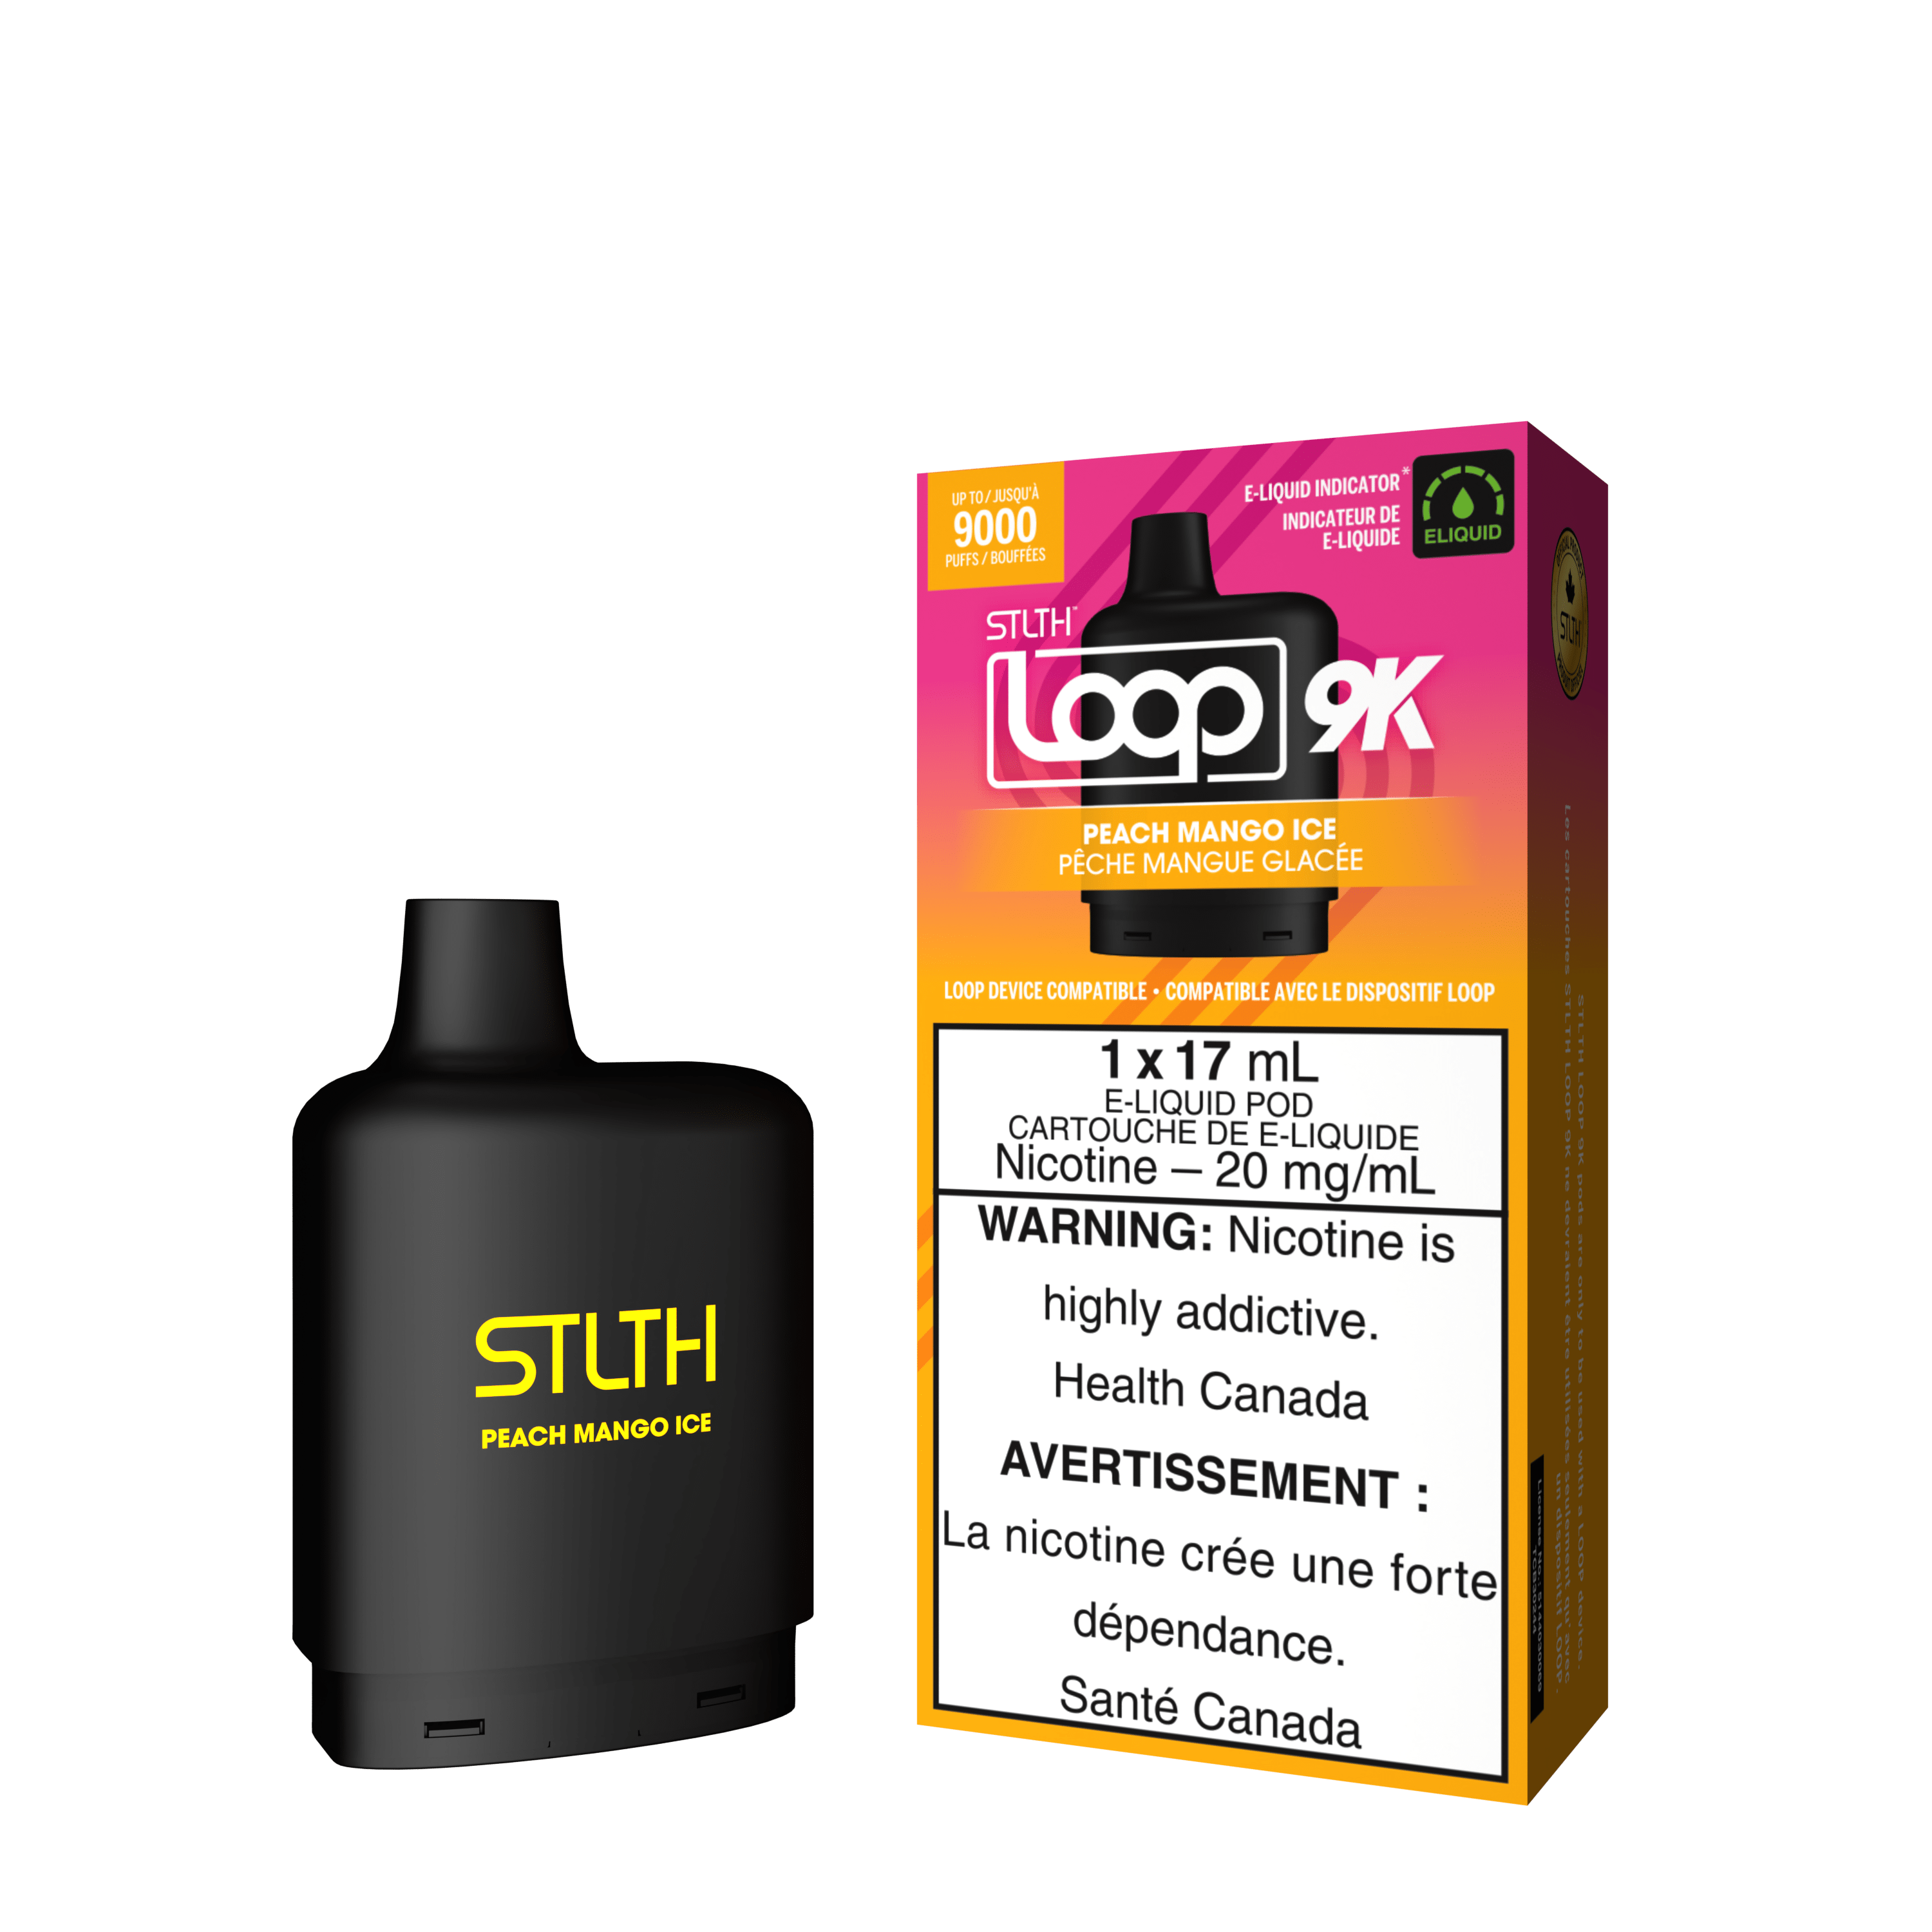 STLTH Loop 9K Pod - Peach Mango Ice available on Canada online vape shop